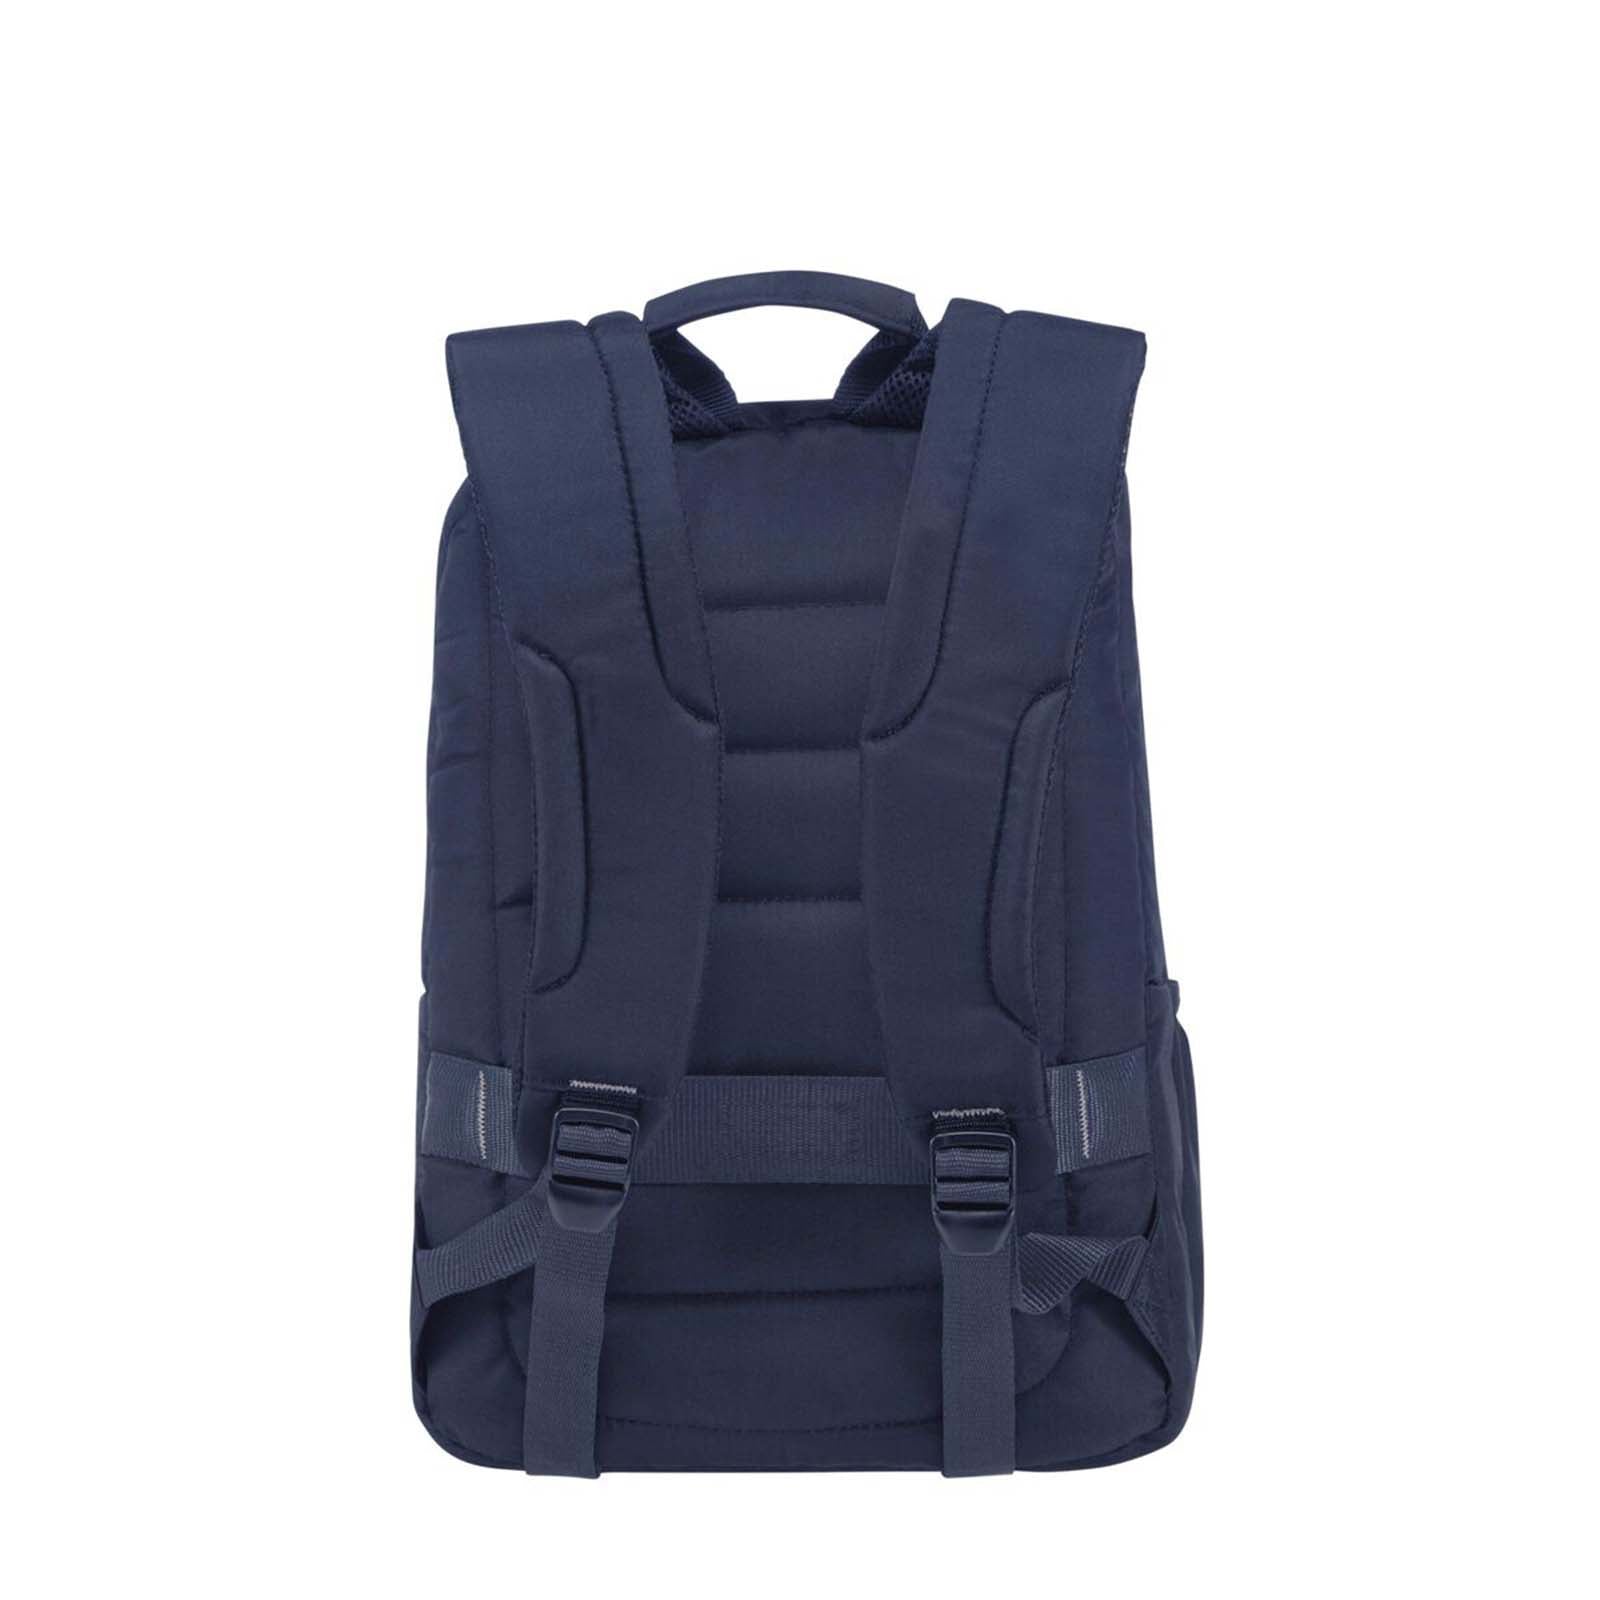 Samsonite-Guardit-Classy-15-Inch-Laptop-Backpack-Midnight-Blue-Harness